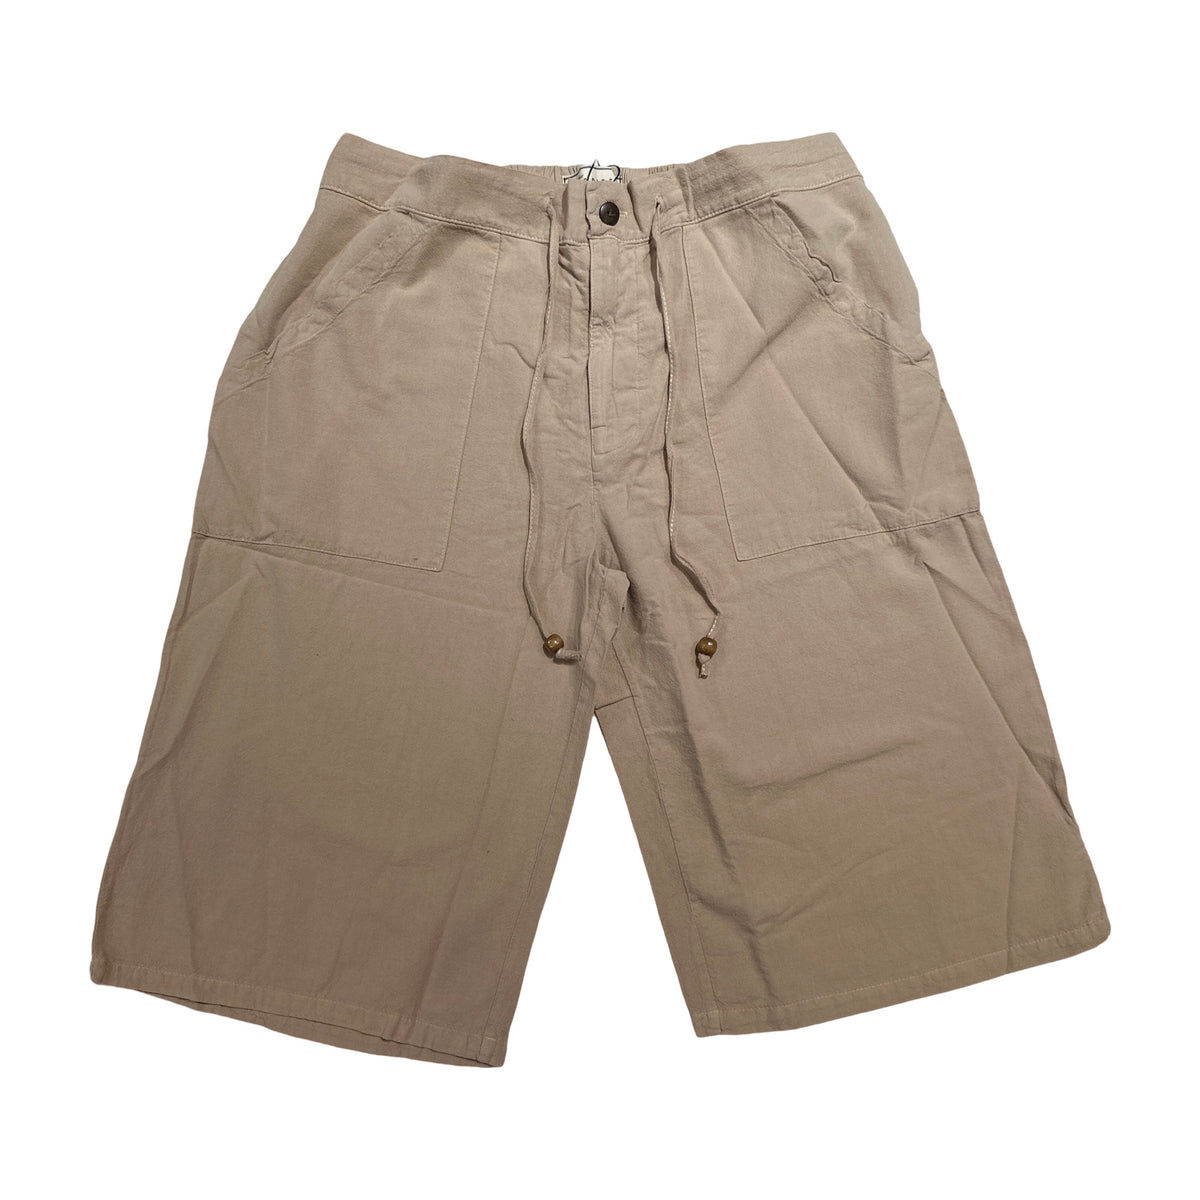 Seaspice Beige Double Pocket Peruvian Cotton Shorts